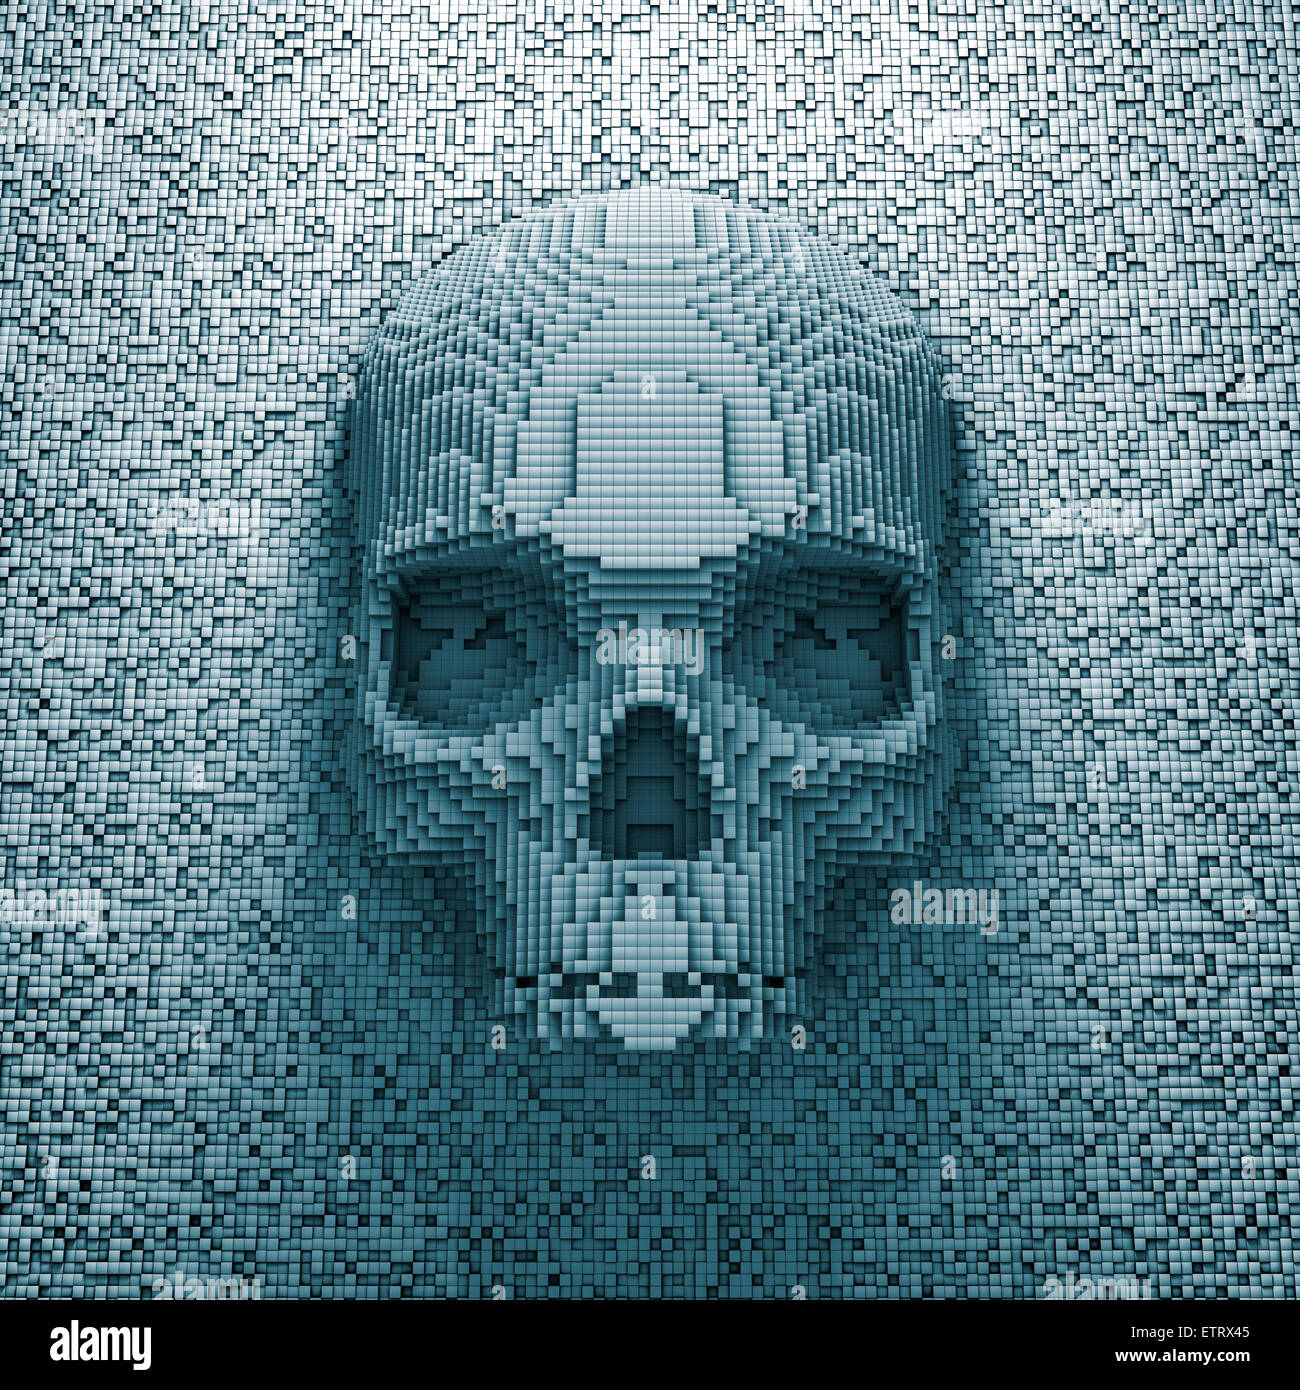 3D render of pixelated skull Stock Photo